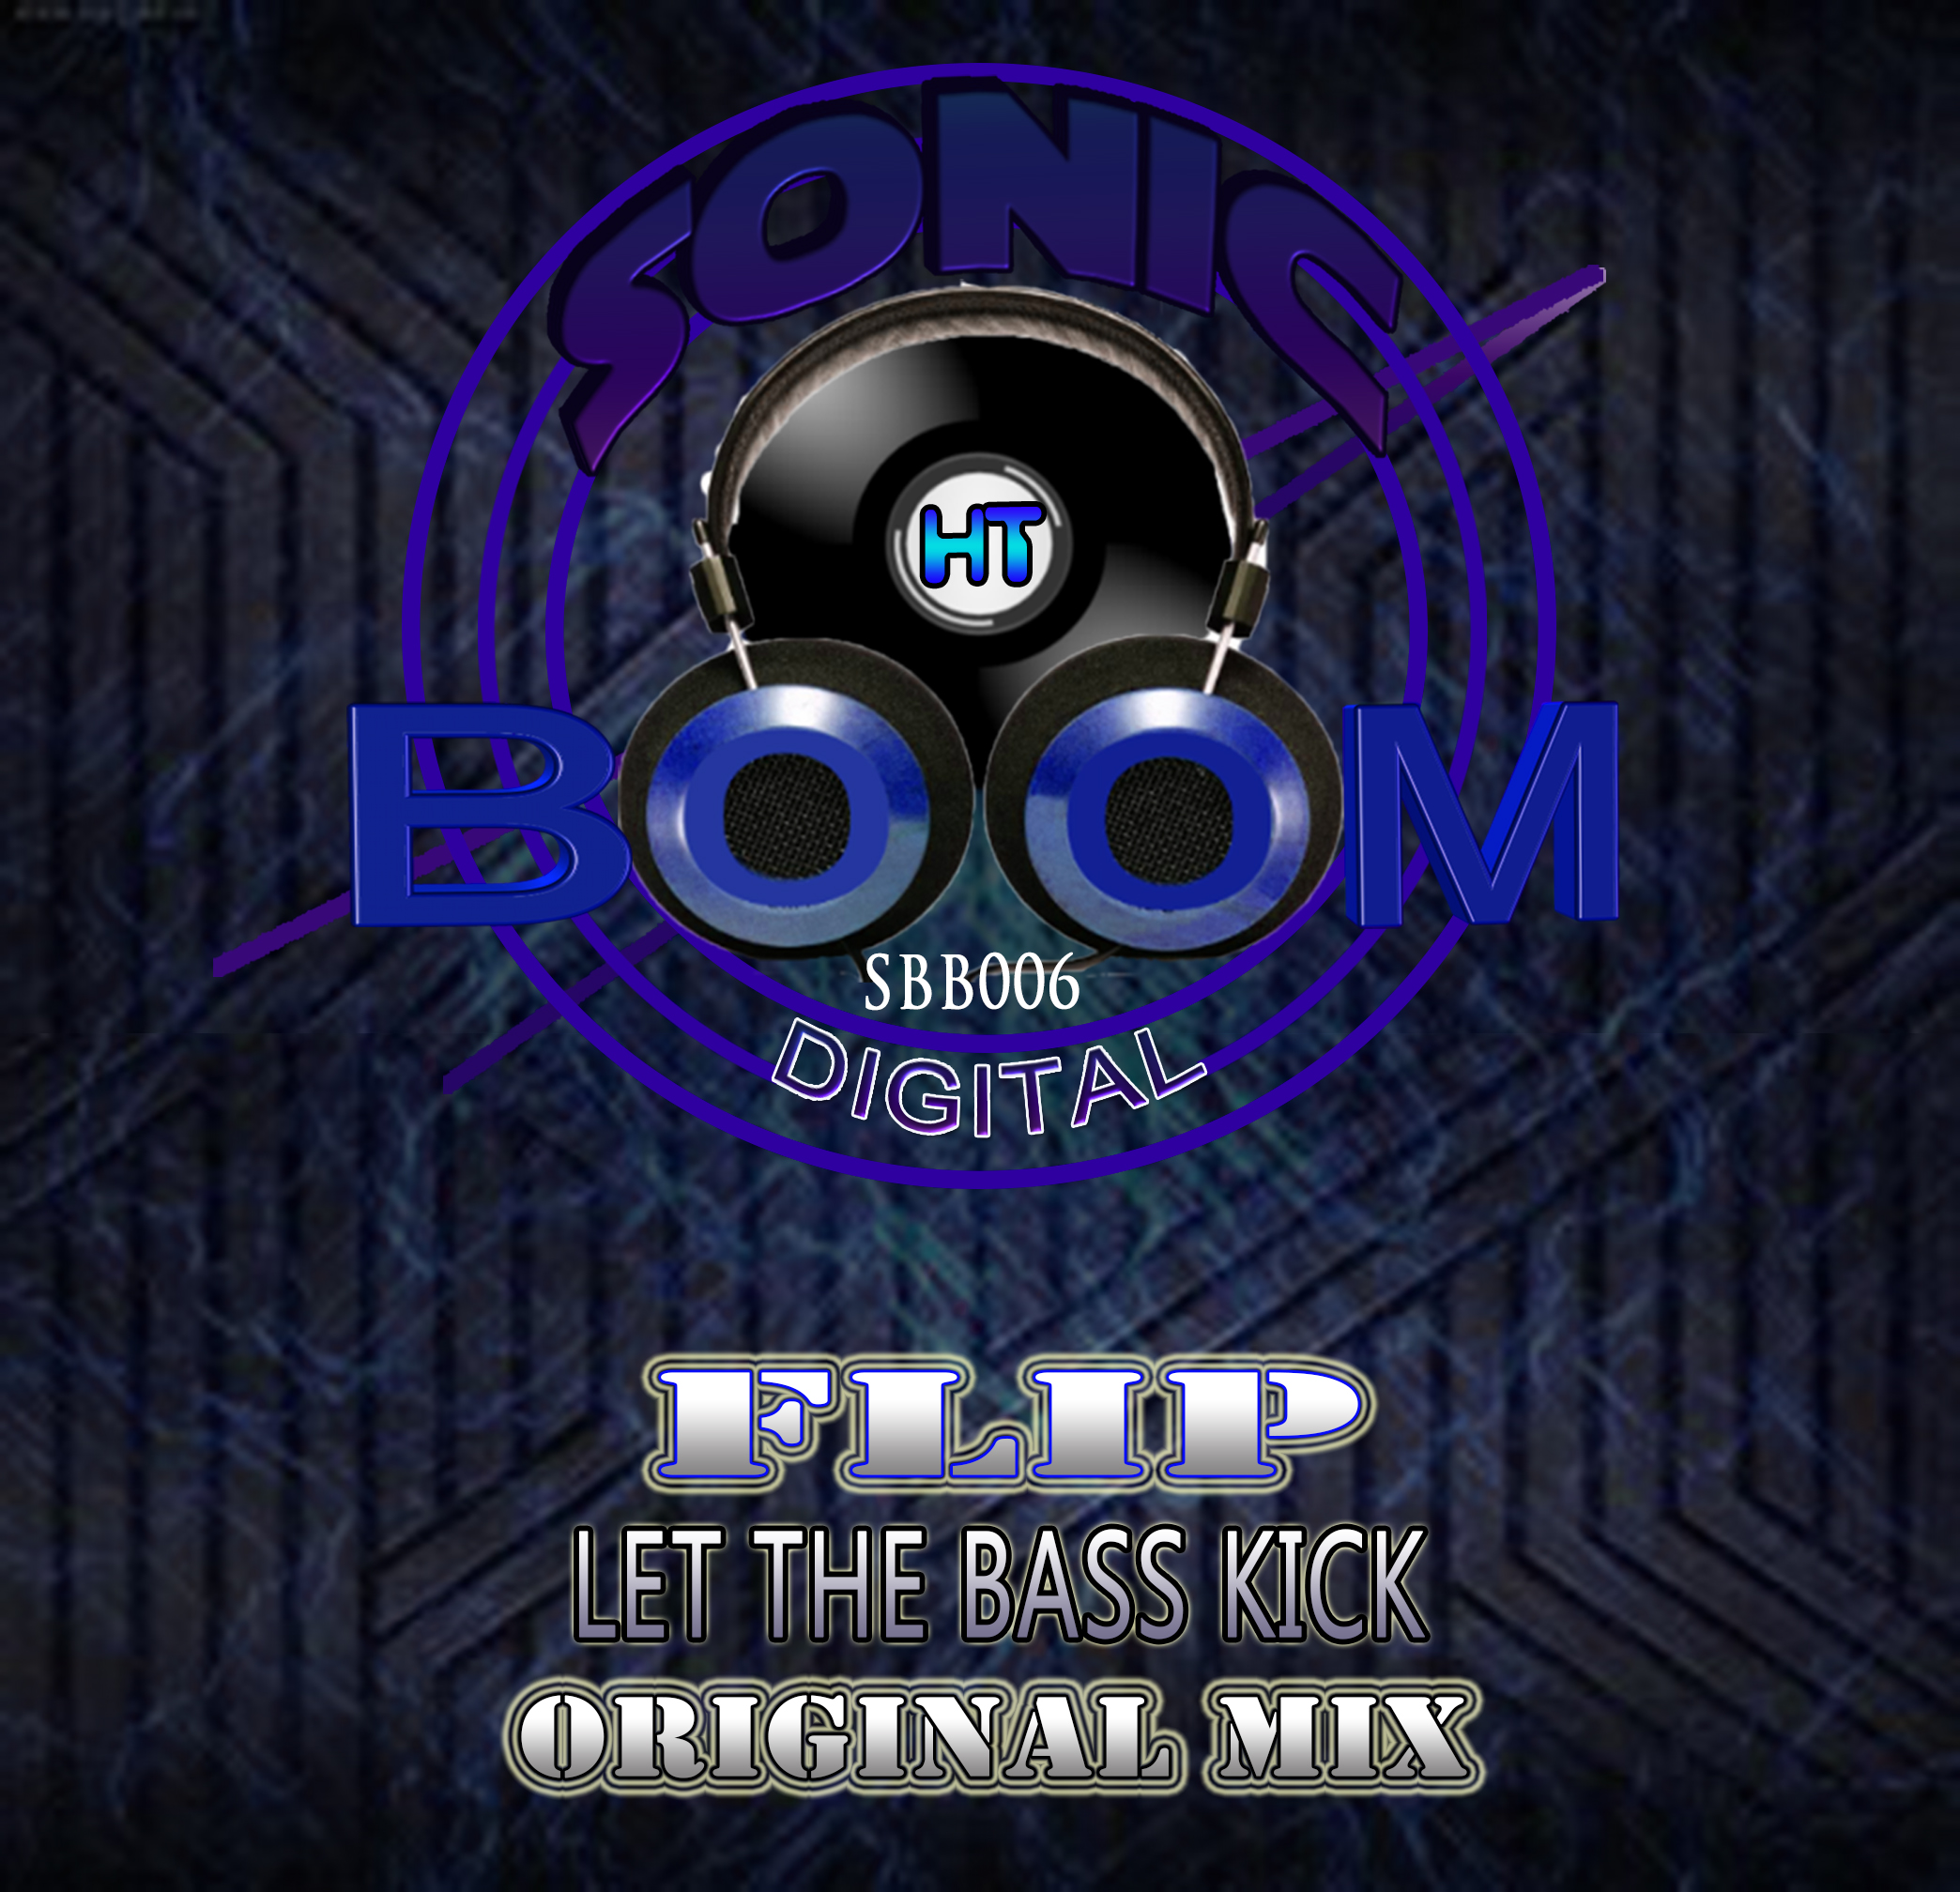 Bass Kick. DJ Braun Let the Bass Kick. Sonic Boom музыка mp3. Флип в Музыке что это. Dj bass kick